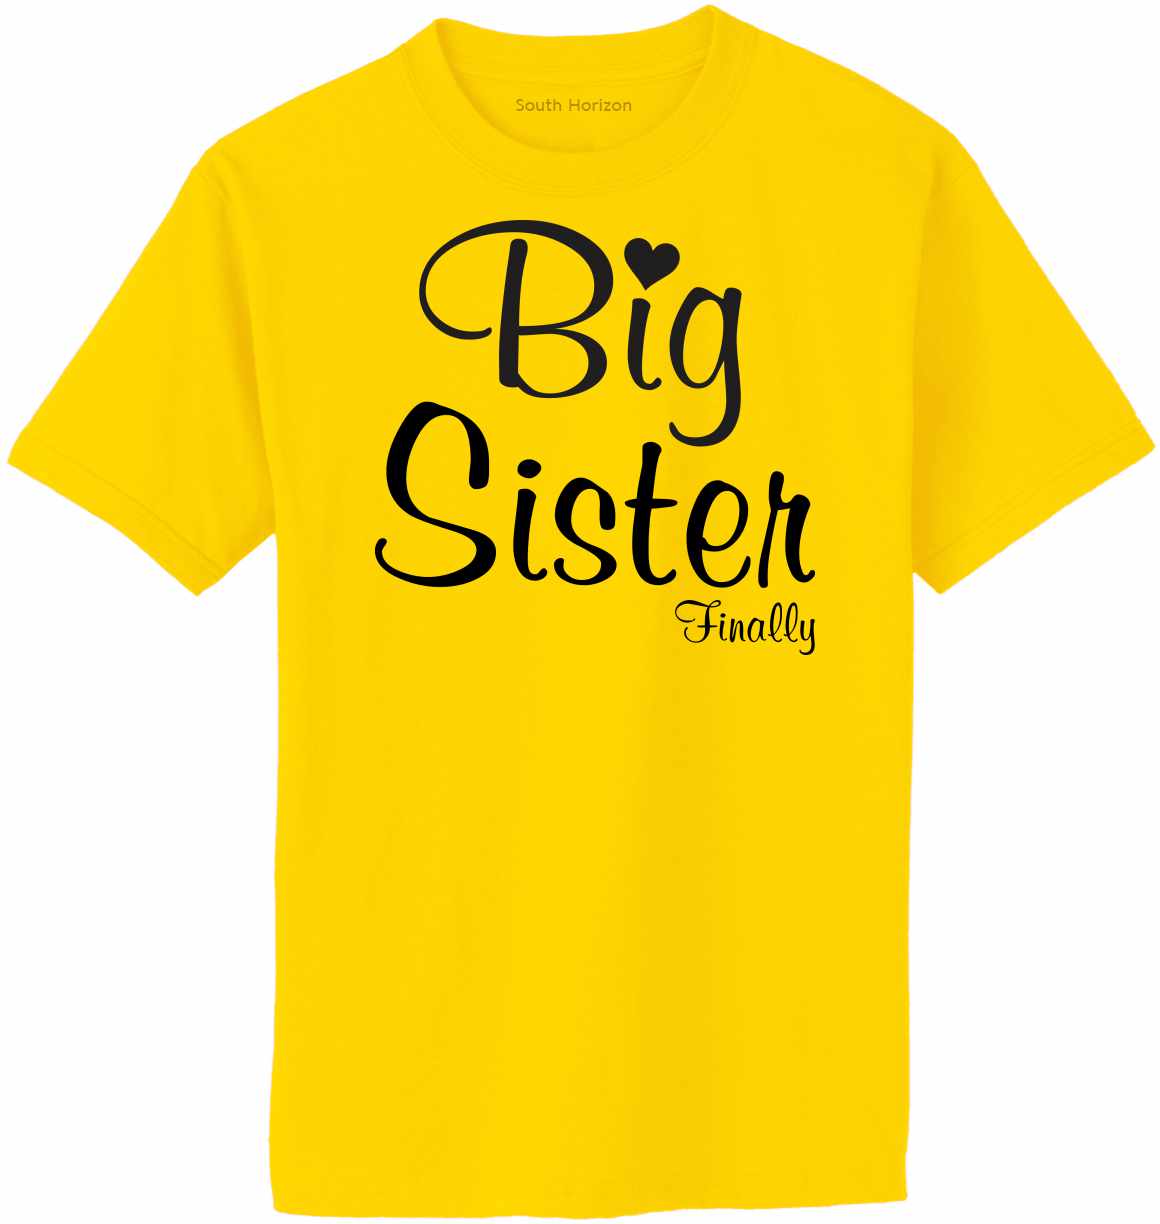 Big Sister Finally on Adult T-Shirt (#1263-1)